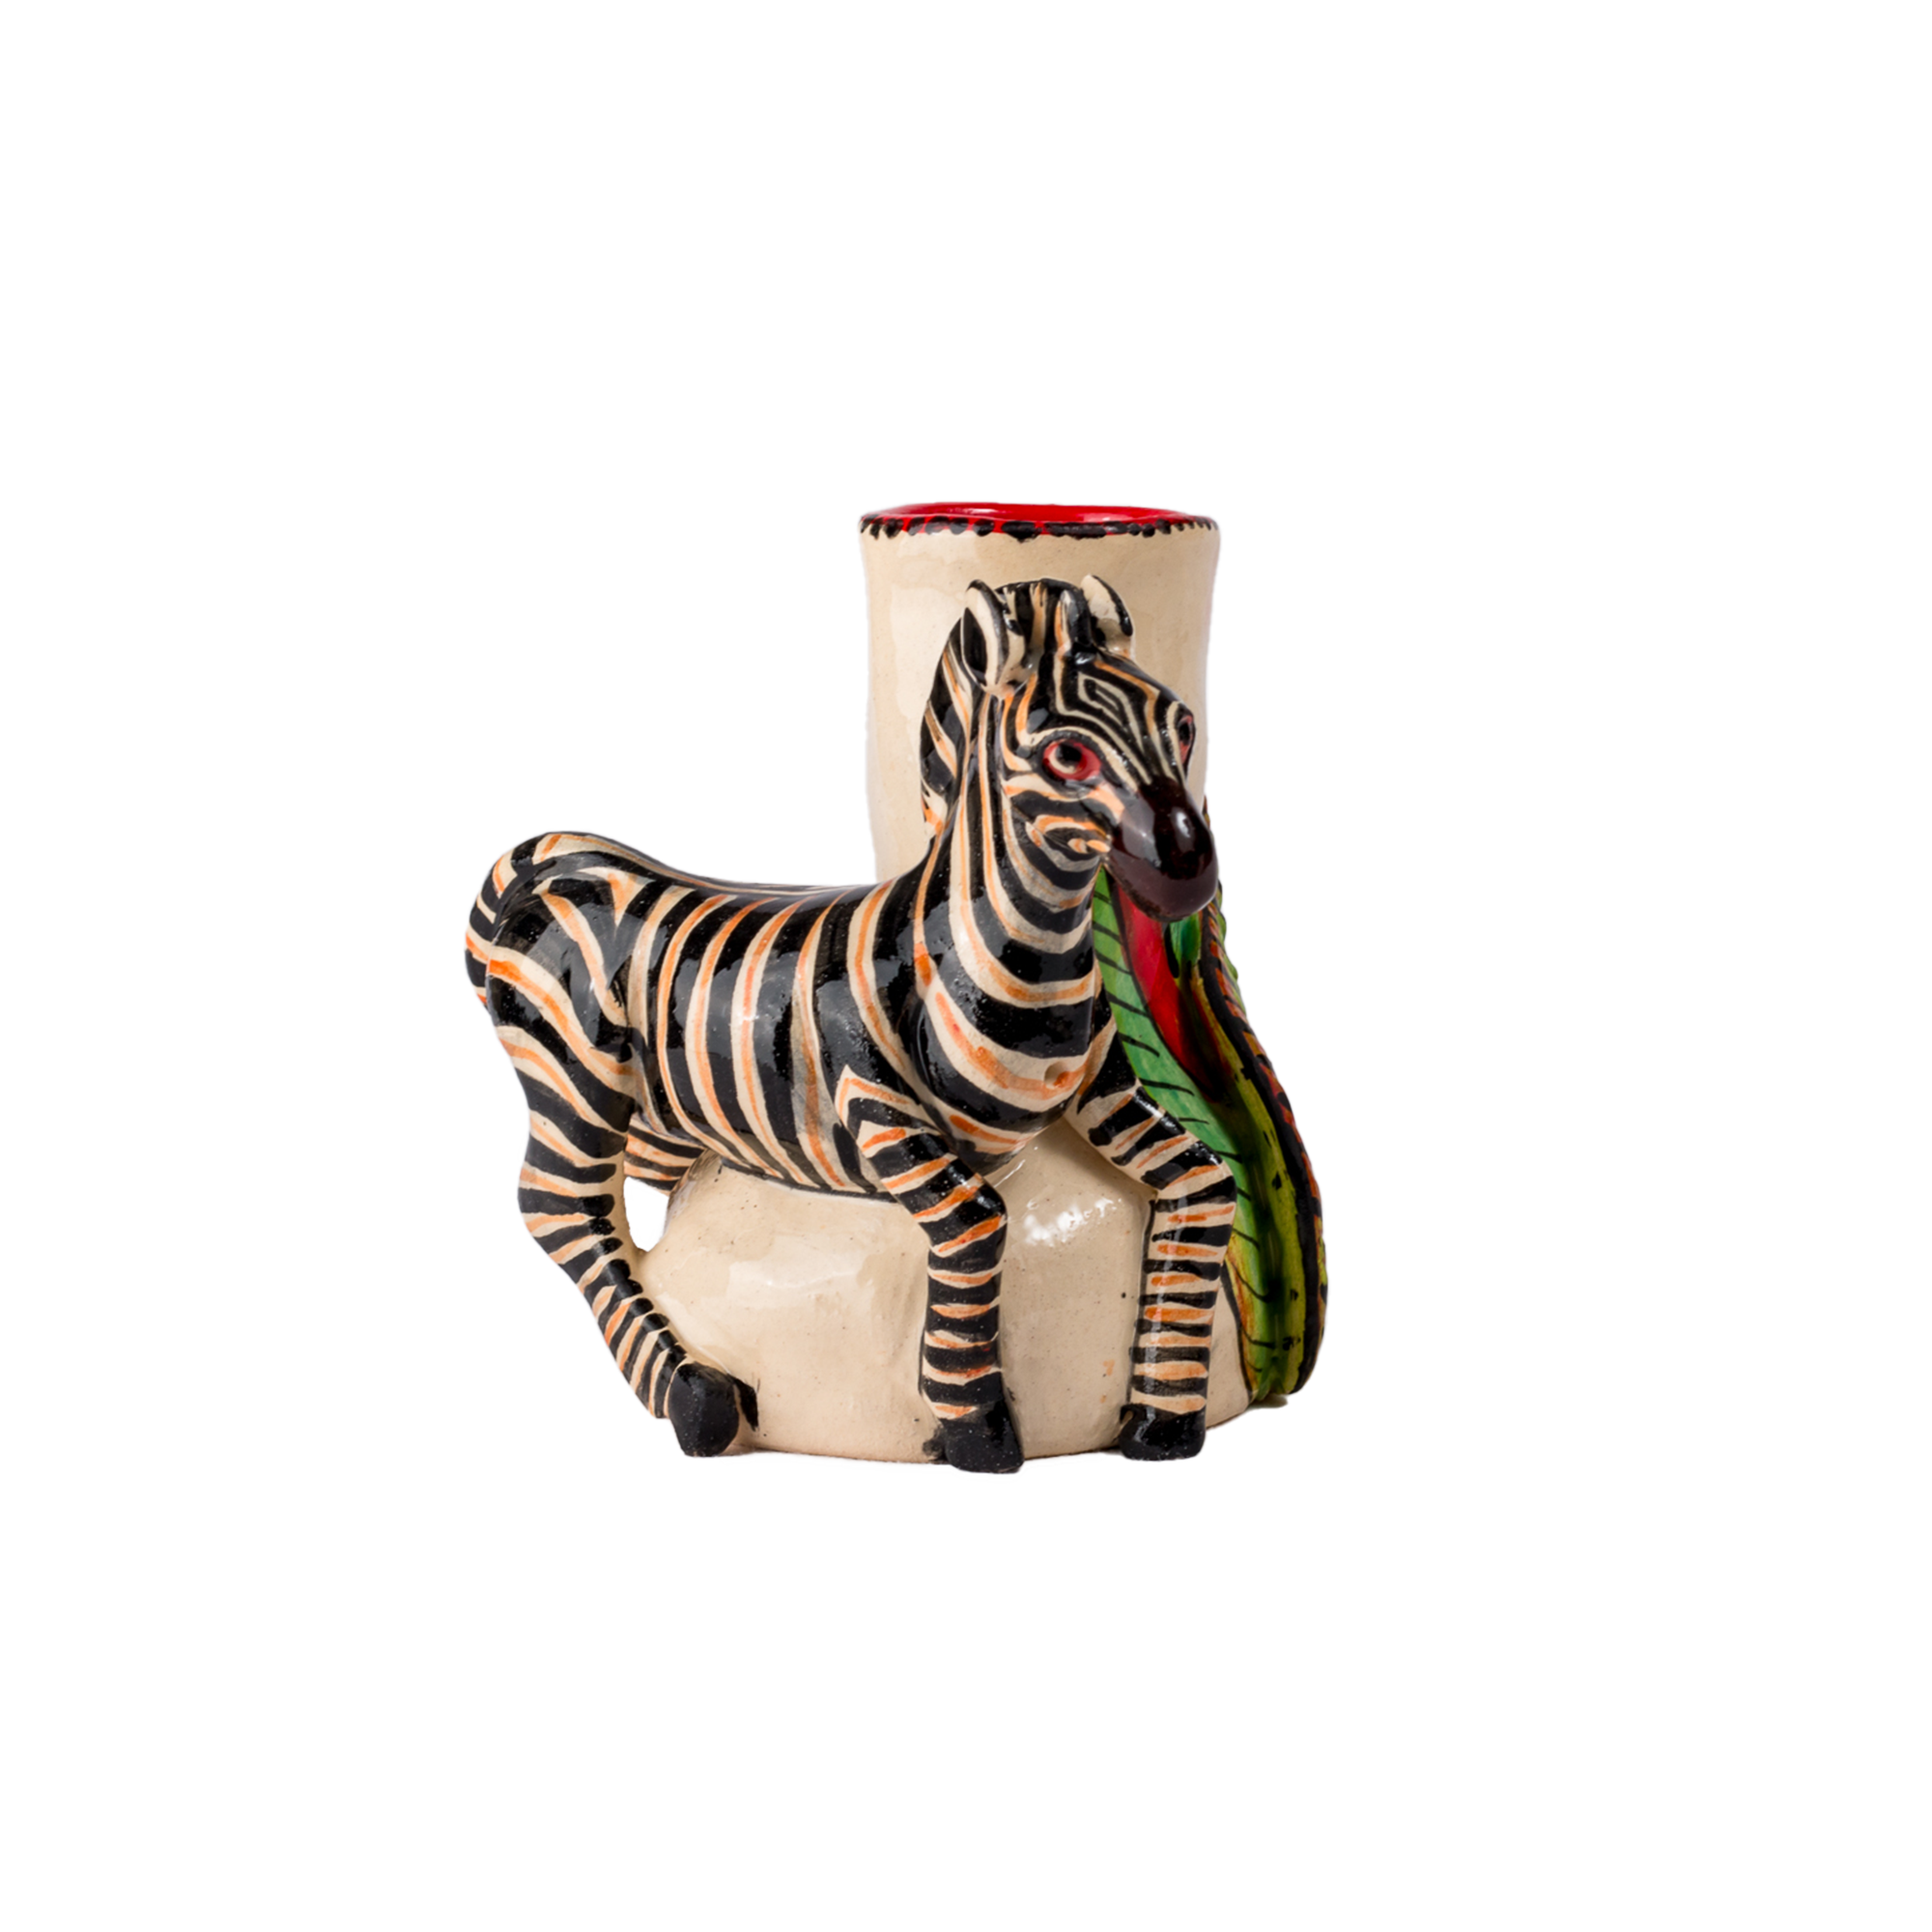 3D Ceramic Zebra Candle Holder